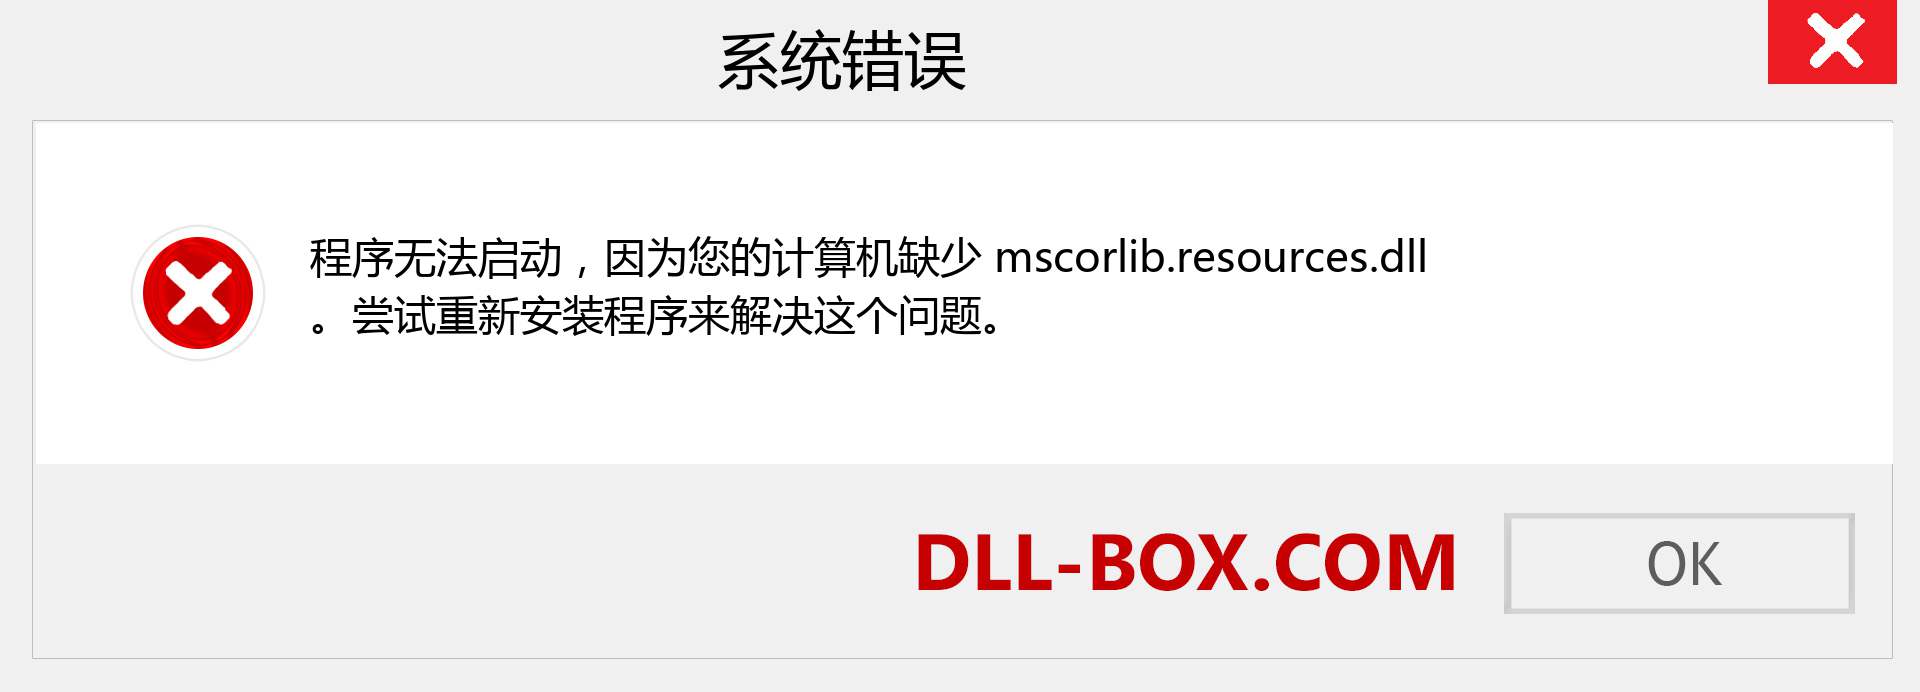 mscorlib.resources.dll 文件丢失？。 适用于 Windows 7、8、10 的下载 - 修复 Windows、照片、图像上的 mscorlib.resources dll 丢失错误